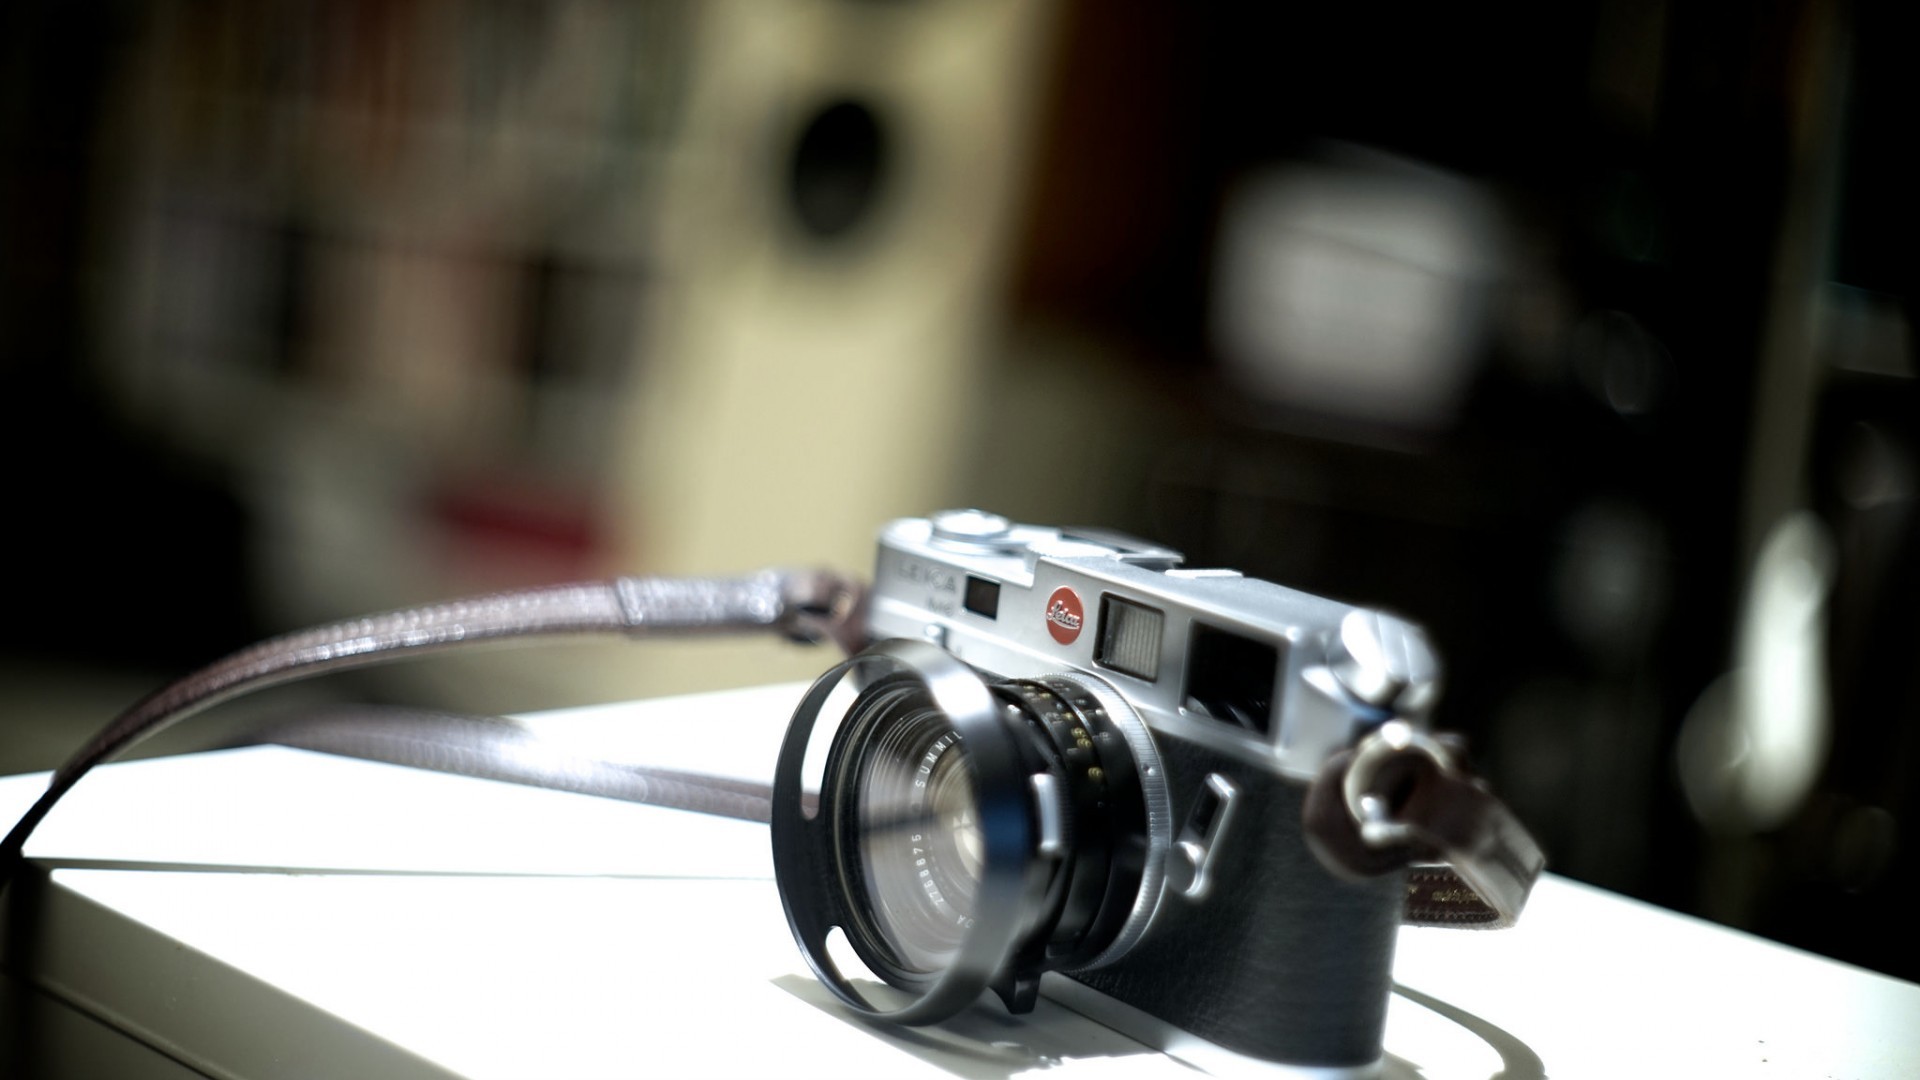 Camera Leica Technology 1920x1080